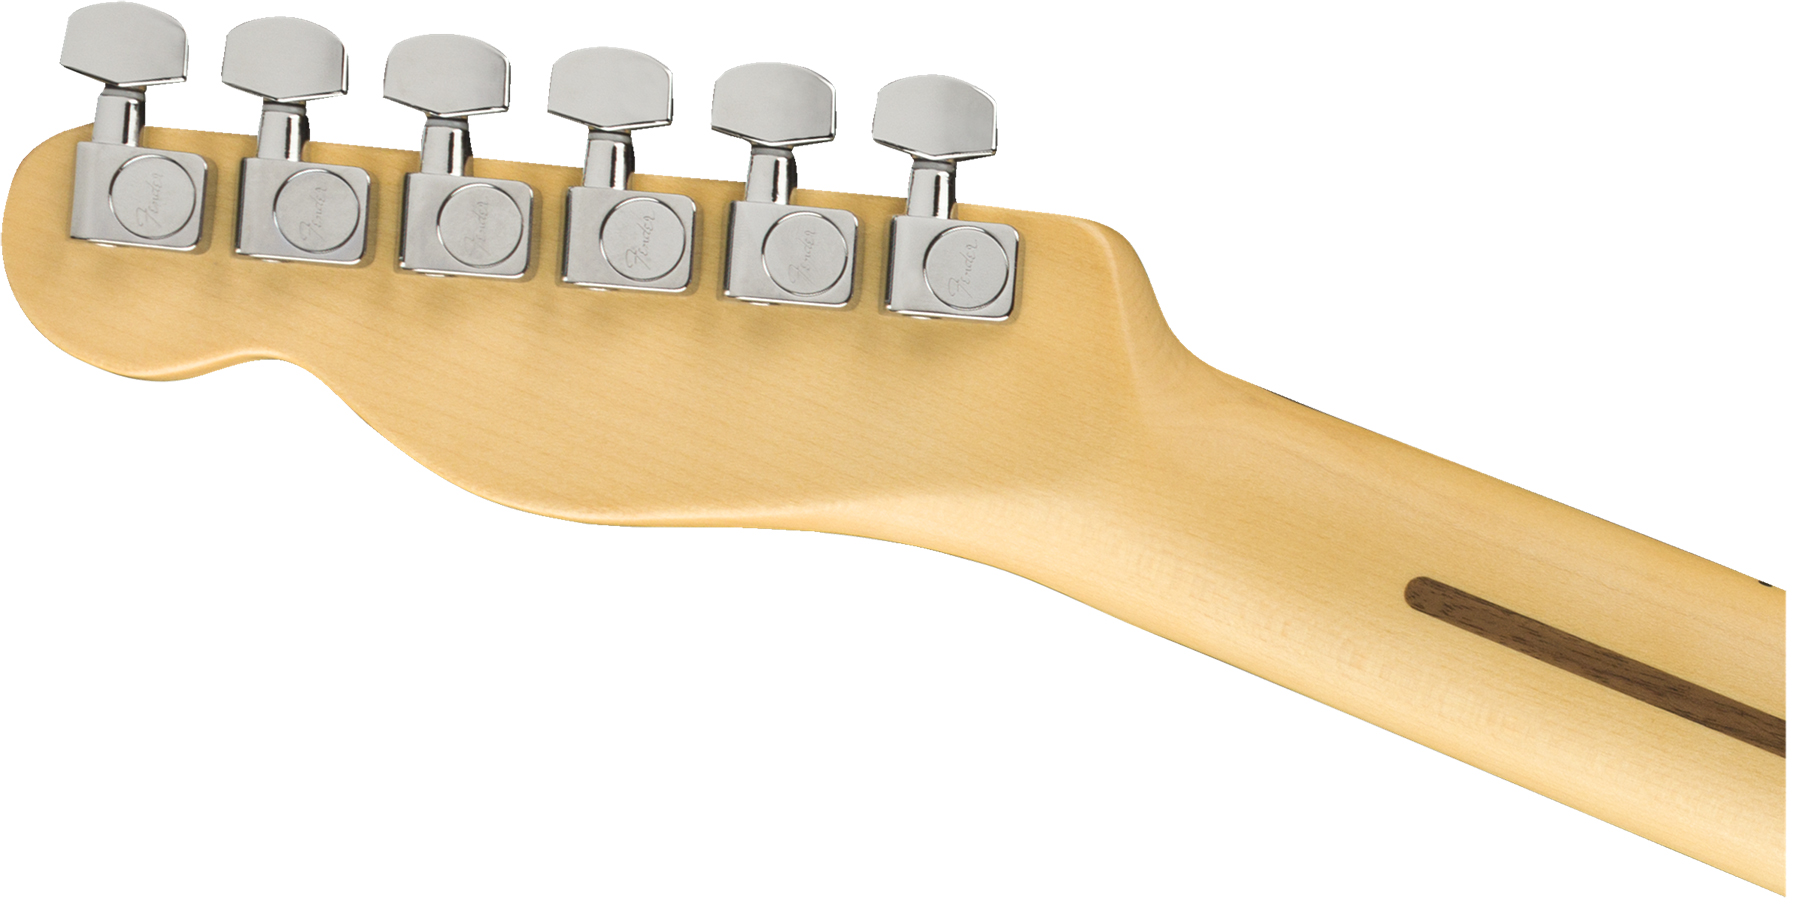 Fender Tele Quilt Maple Top Rarities Usa Mn - Blue Cloud - Televorm elektrische gitaar - Variation 3